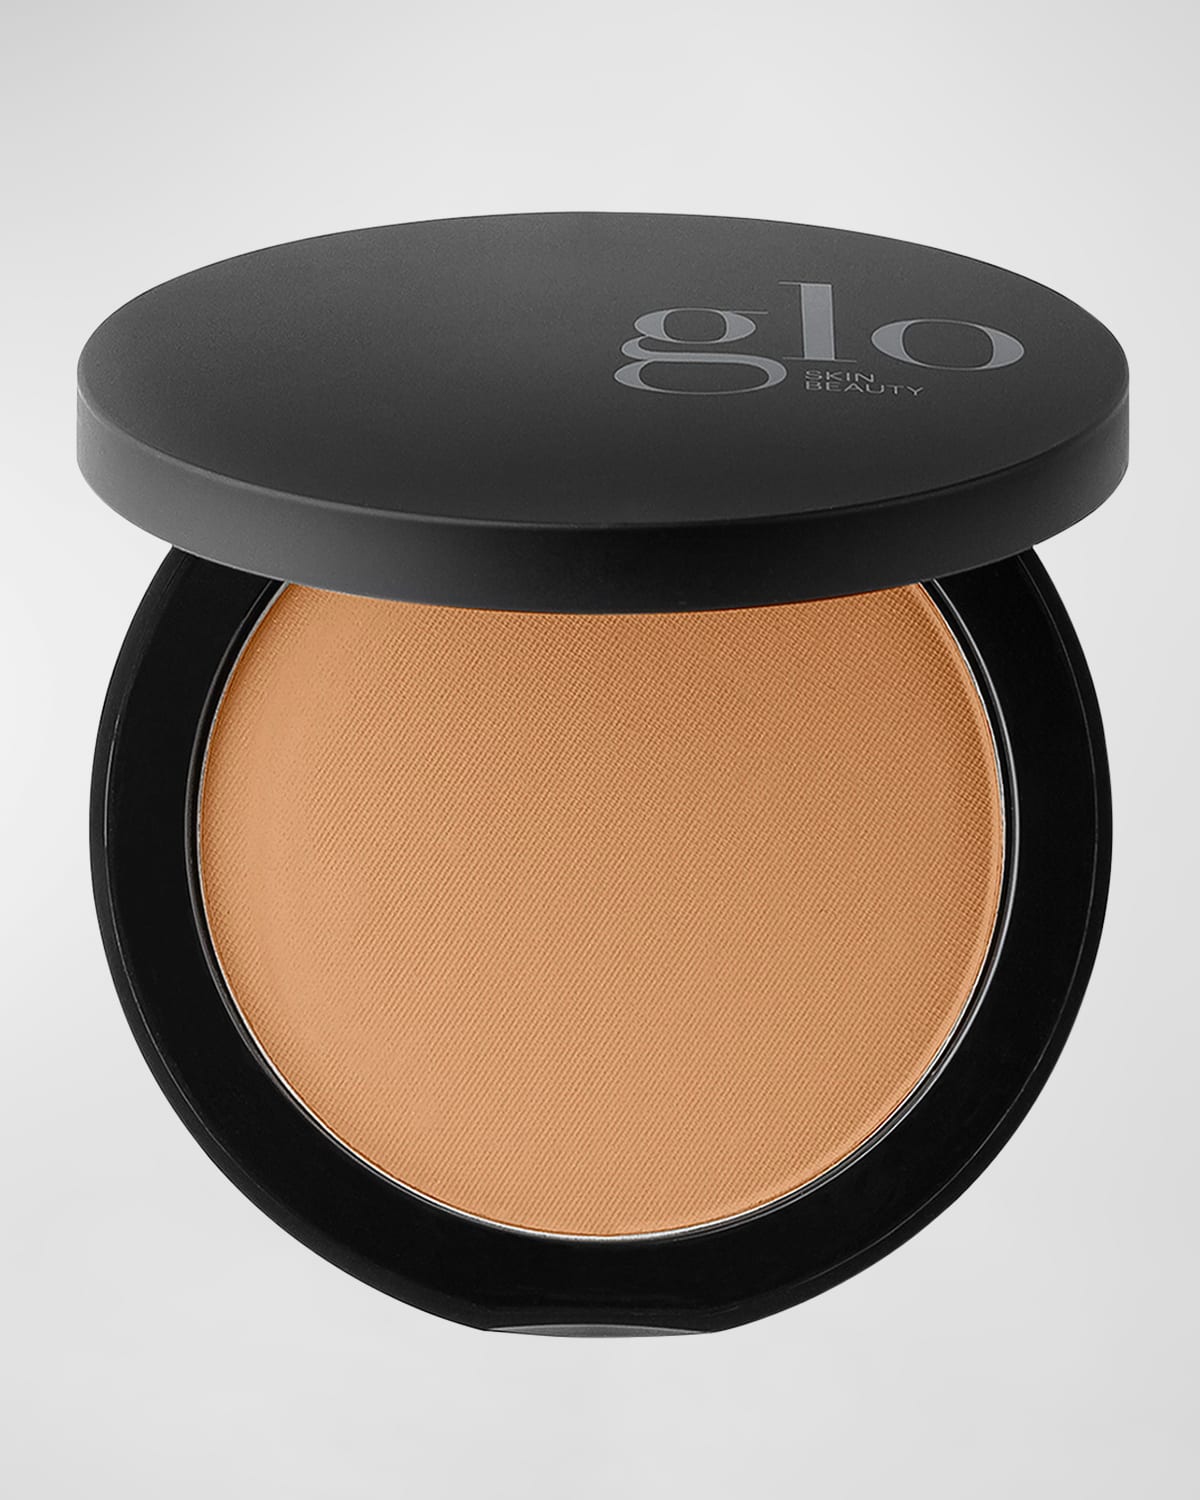 Glo Skin Beauty Pressed Base Powder, 0.31 oz.